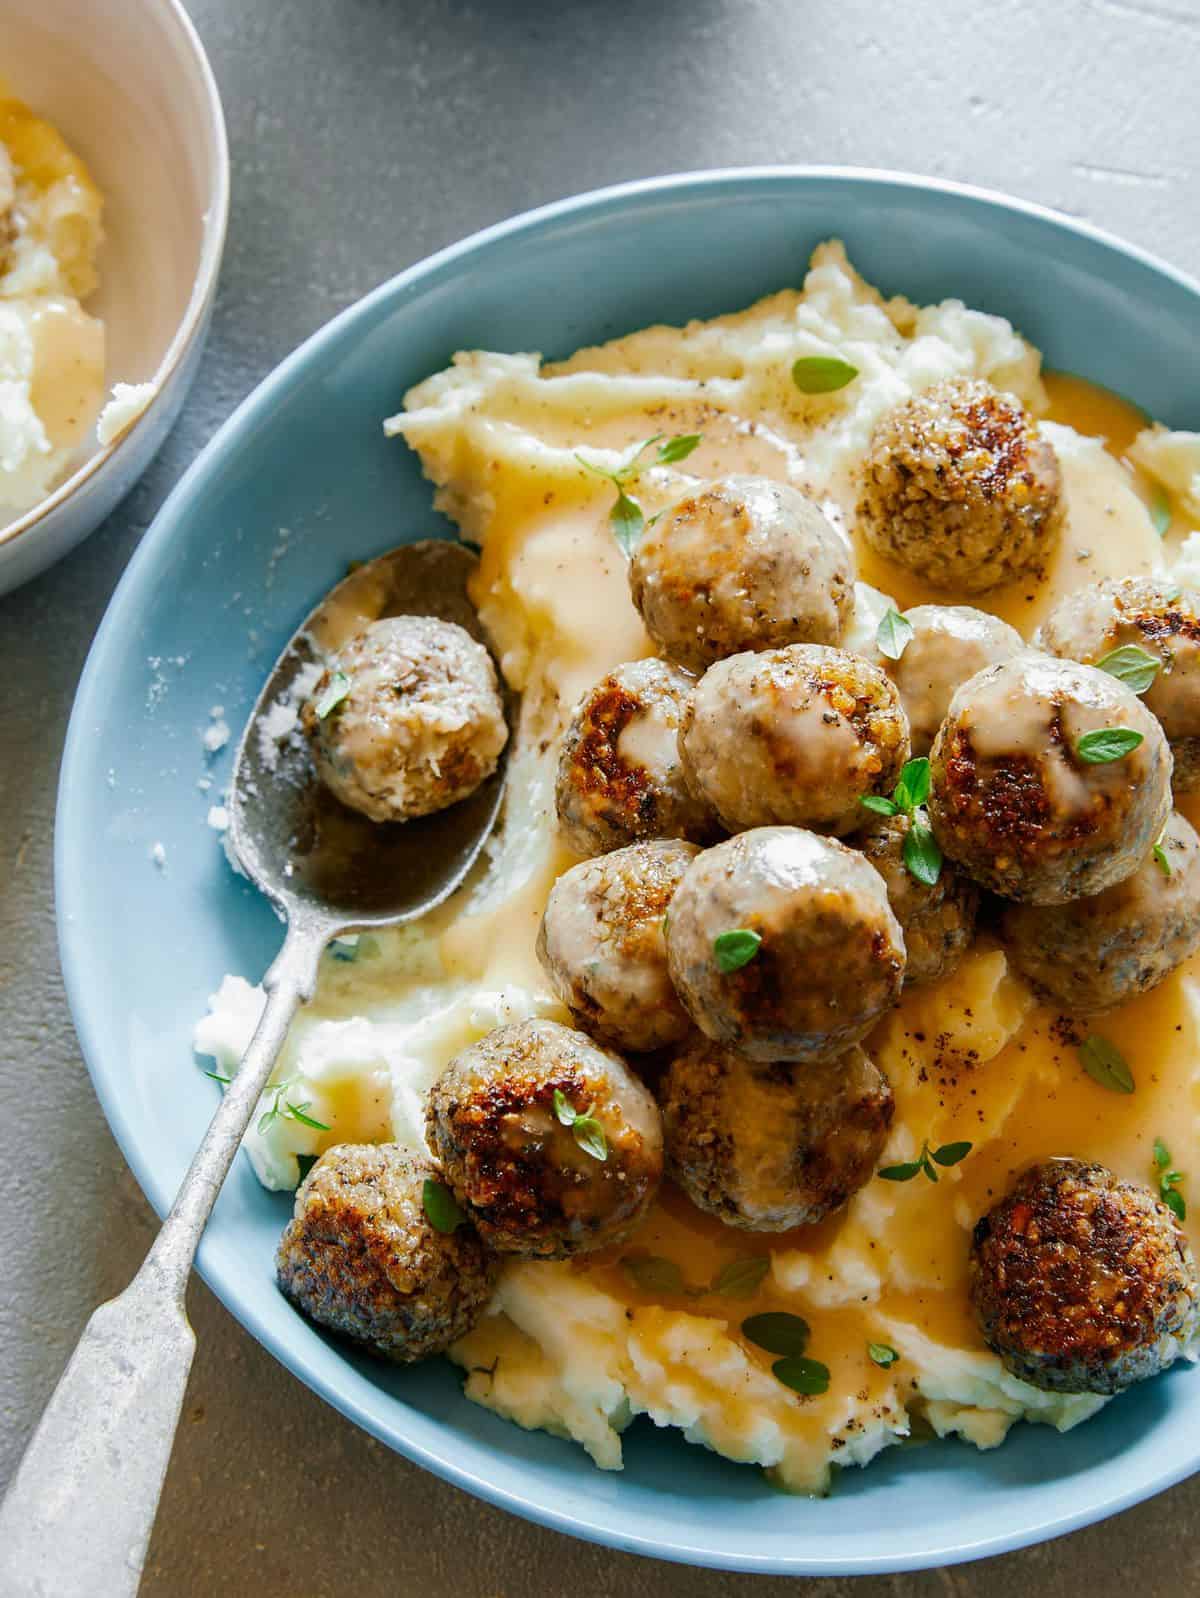 Vegan Swedish Meatballs over Mashed Potatoes and Gravy